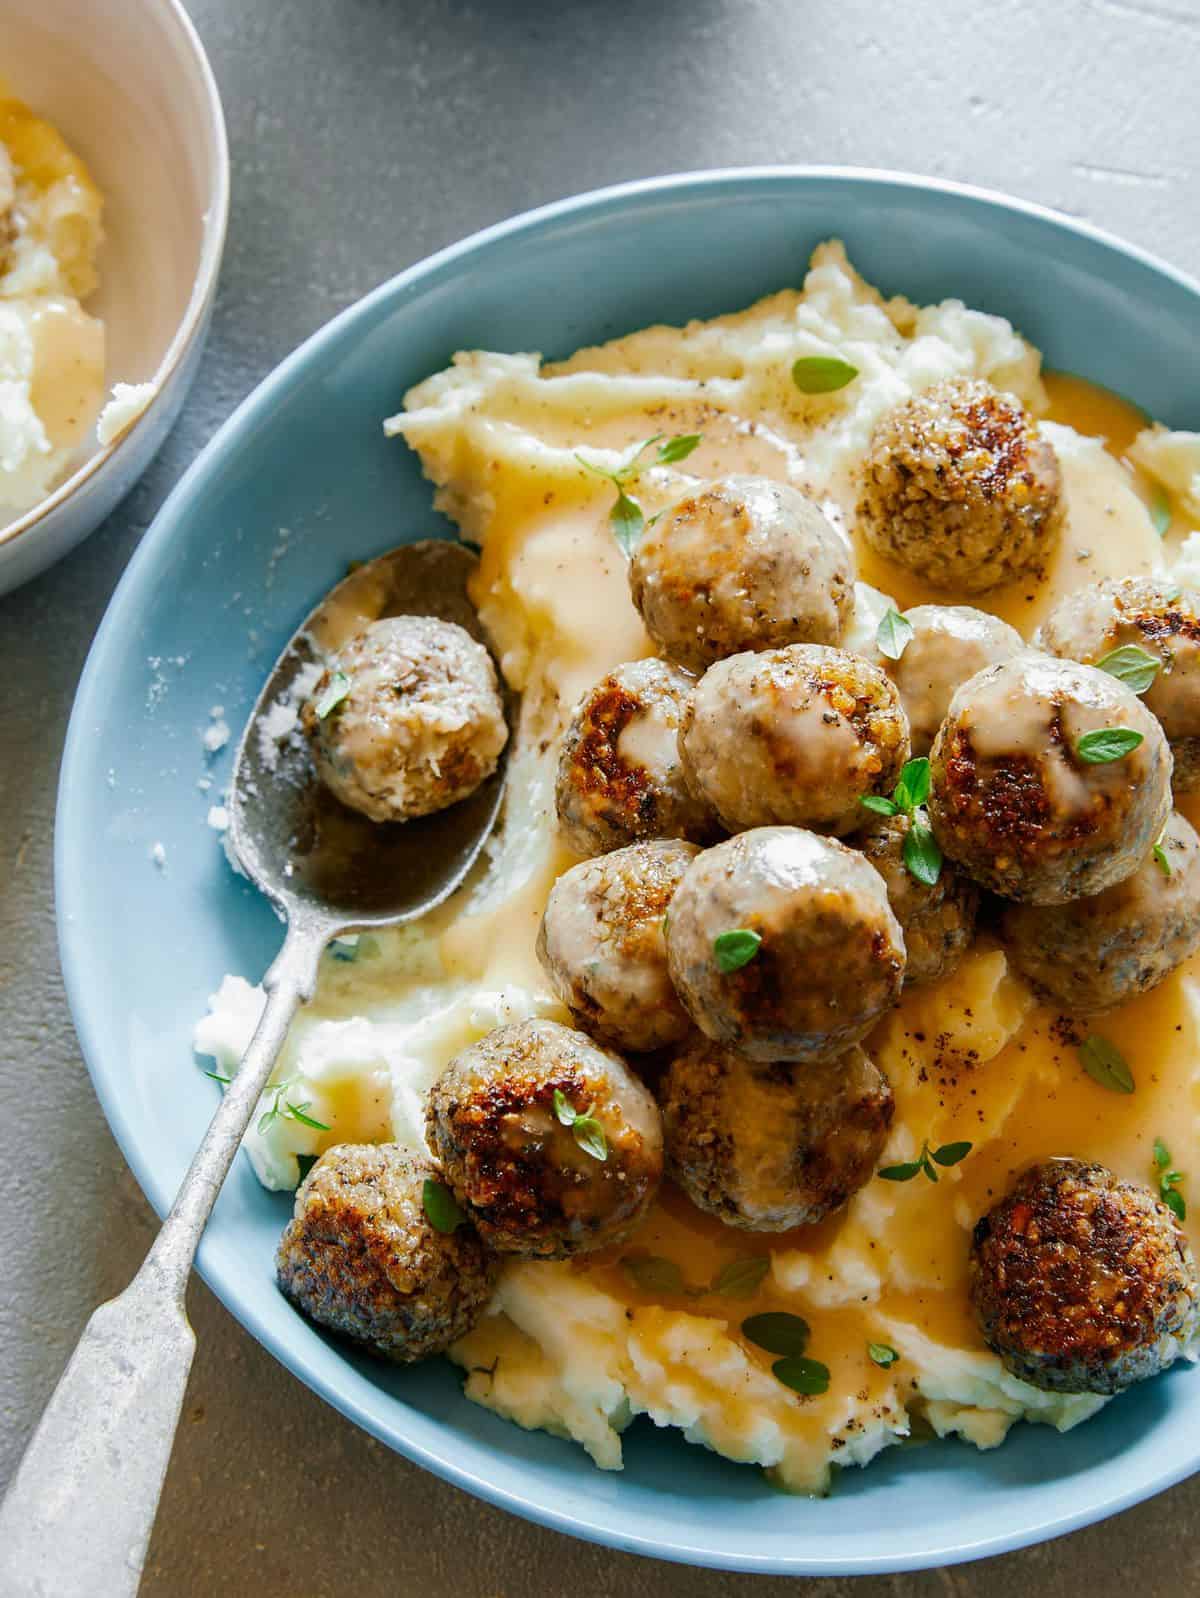 Vegan Swedish Meatballs over Mashed Potatoes and Gravy